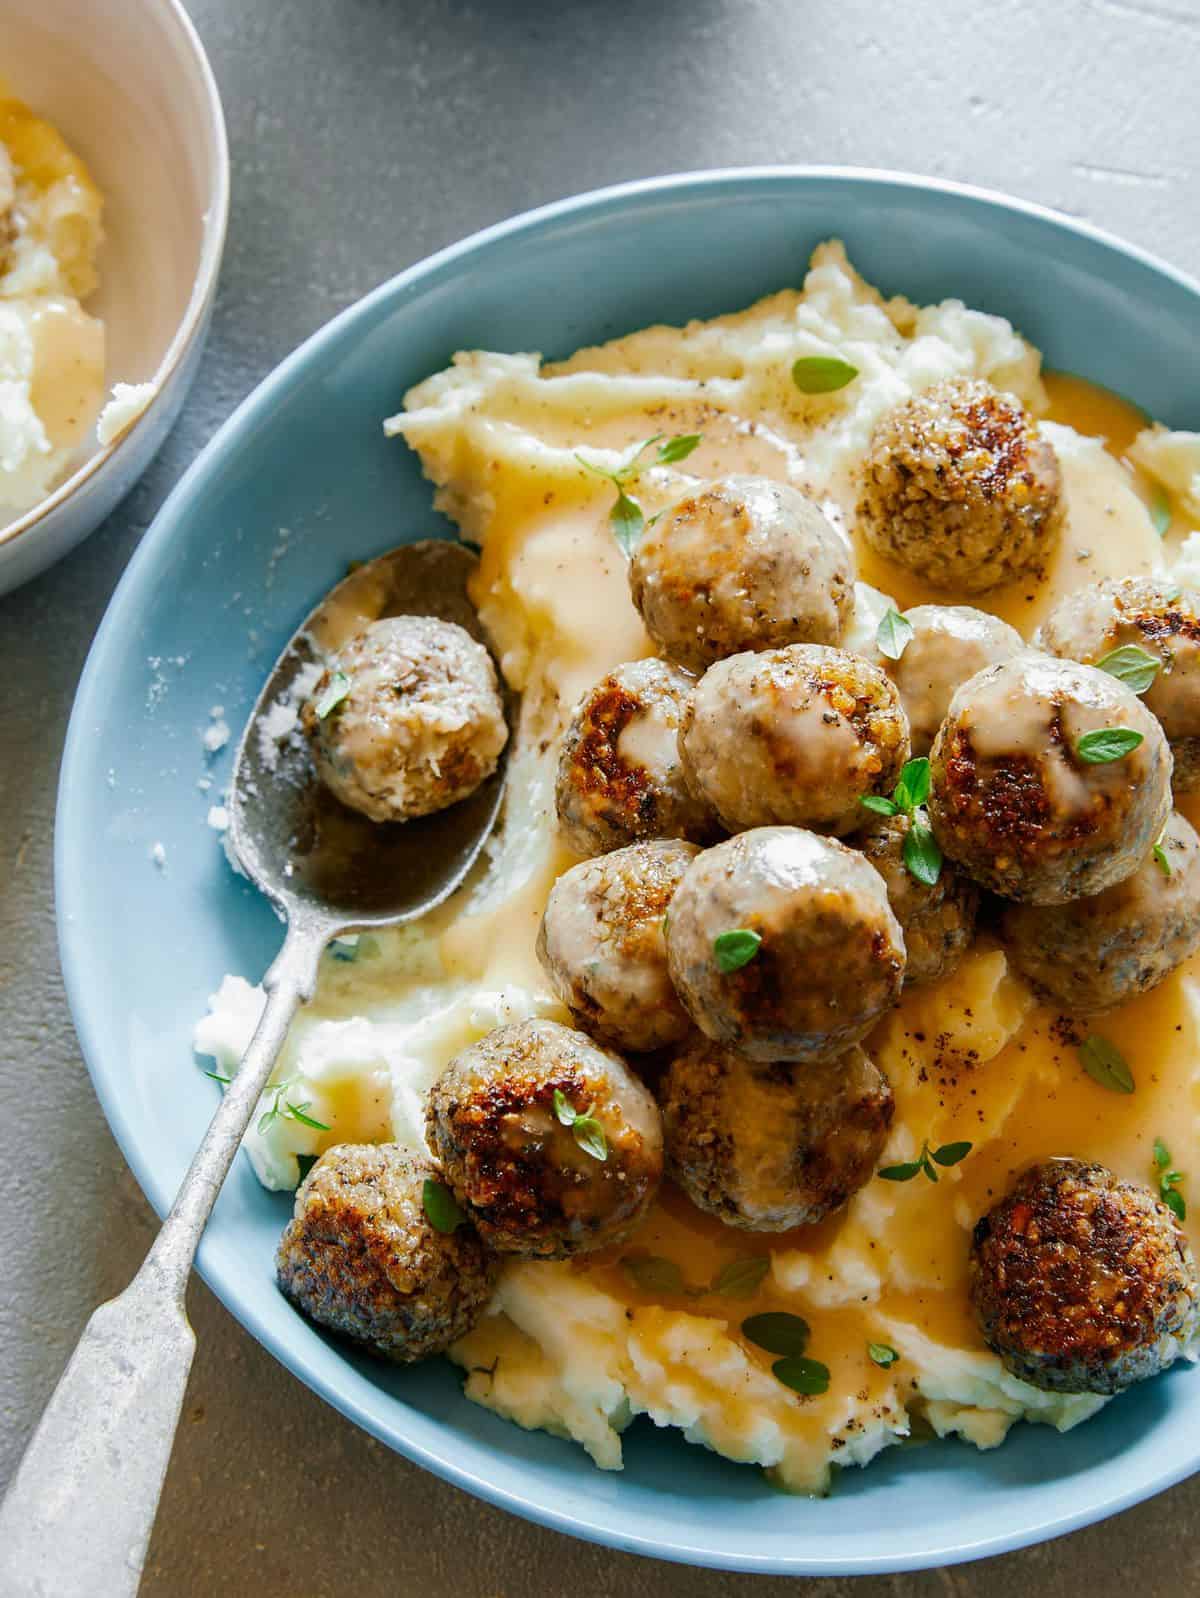 Vegan Swedish Meatballs over Mashed Potatoes and Gravy